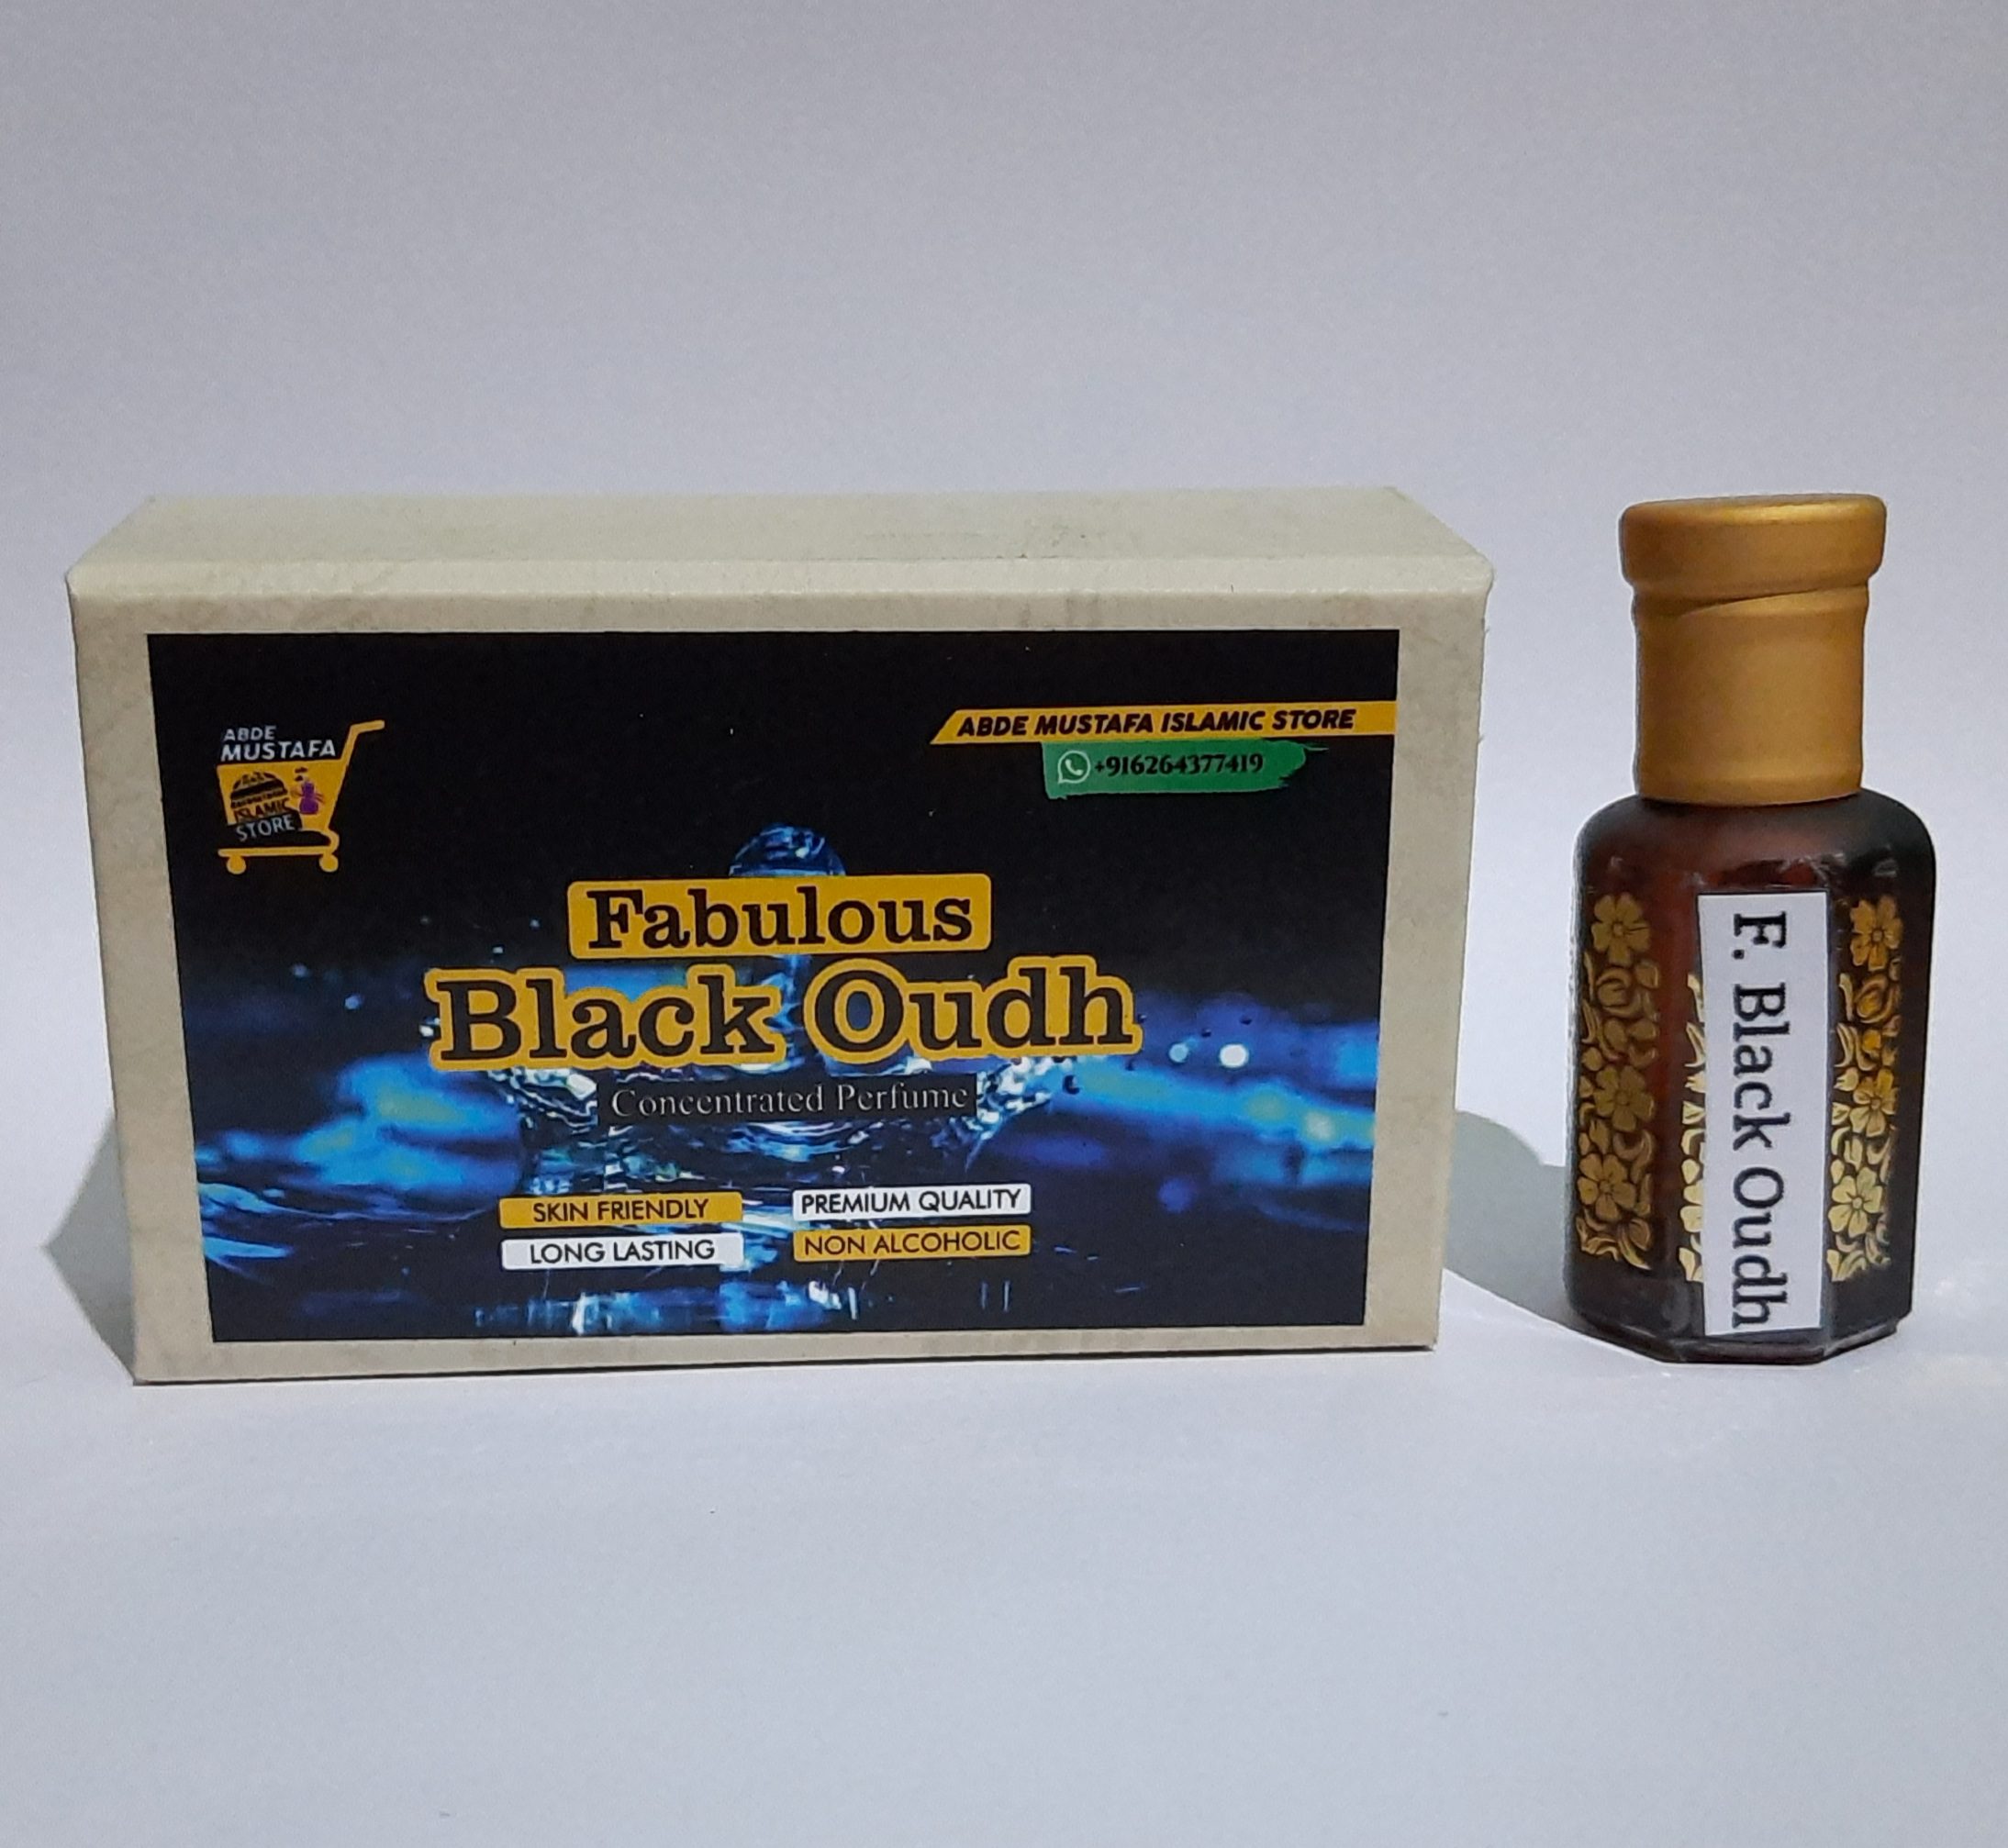 Fabulous Black Oudh Premium Quality Non Alcoholic Synthetic Attar 10m